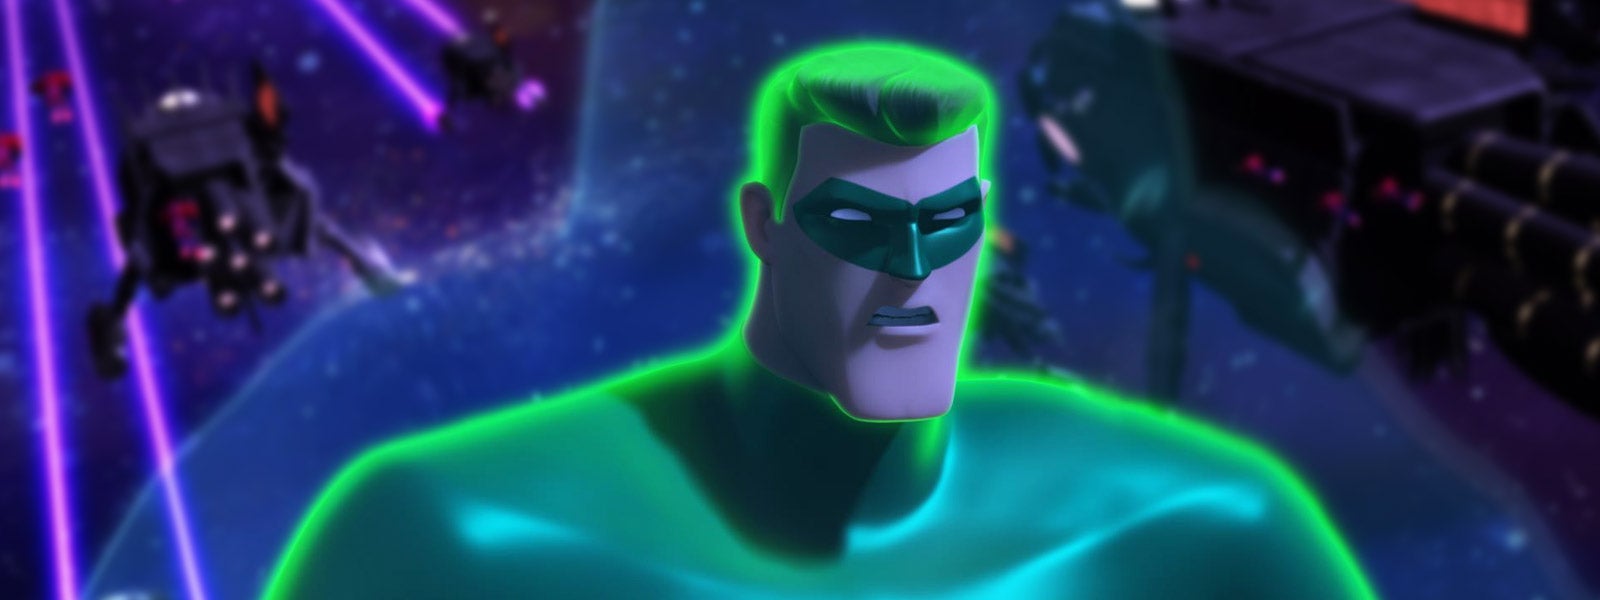 Green Lantern The Animated Series Dark Matter